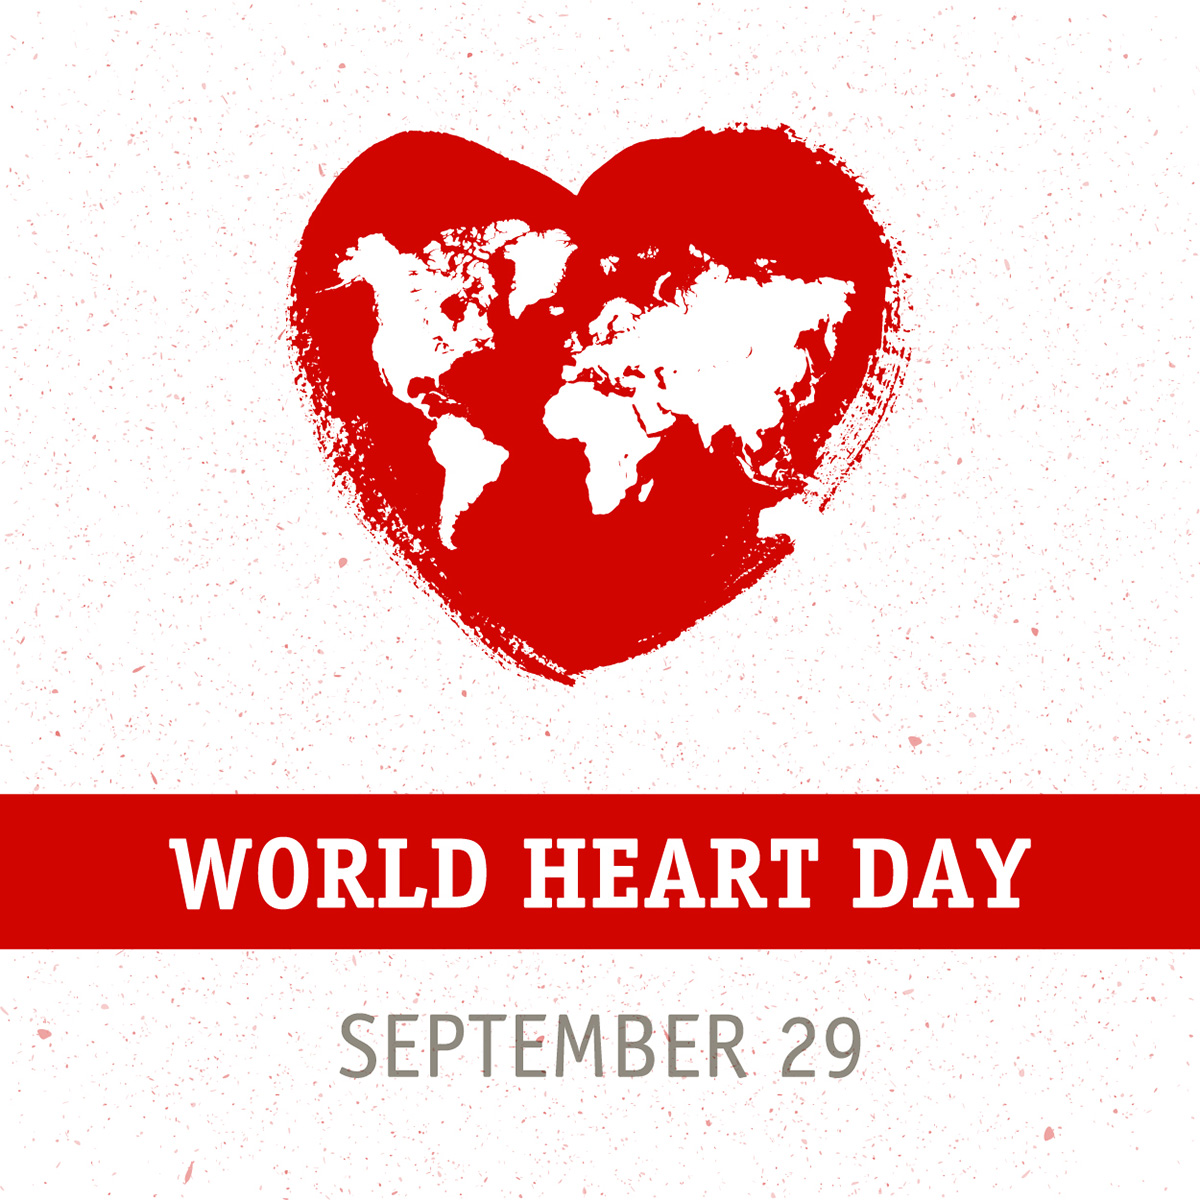 Celebrate World Heart Day!